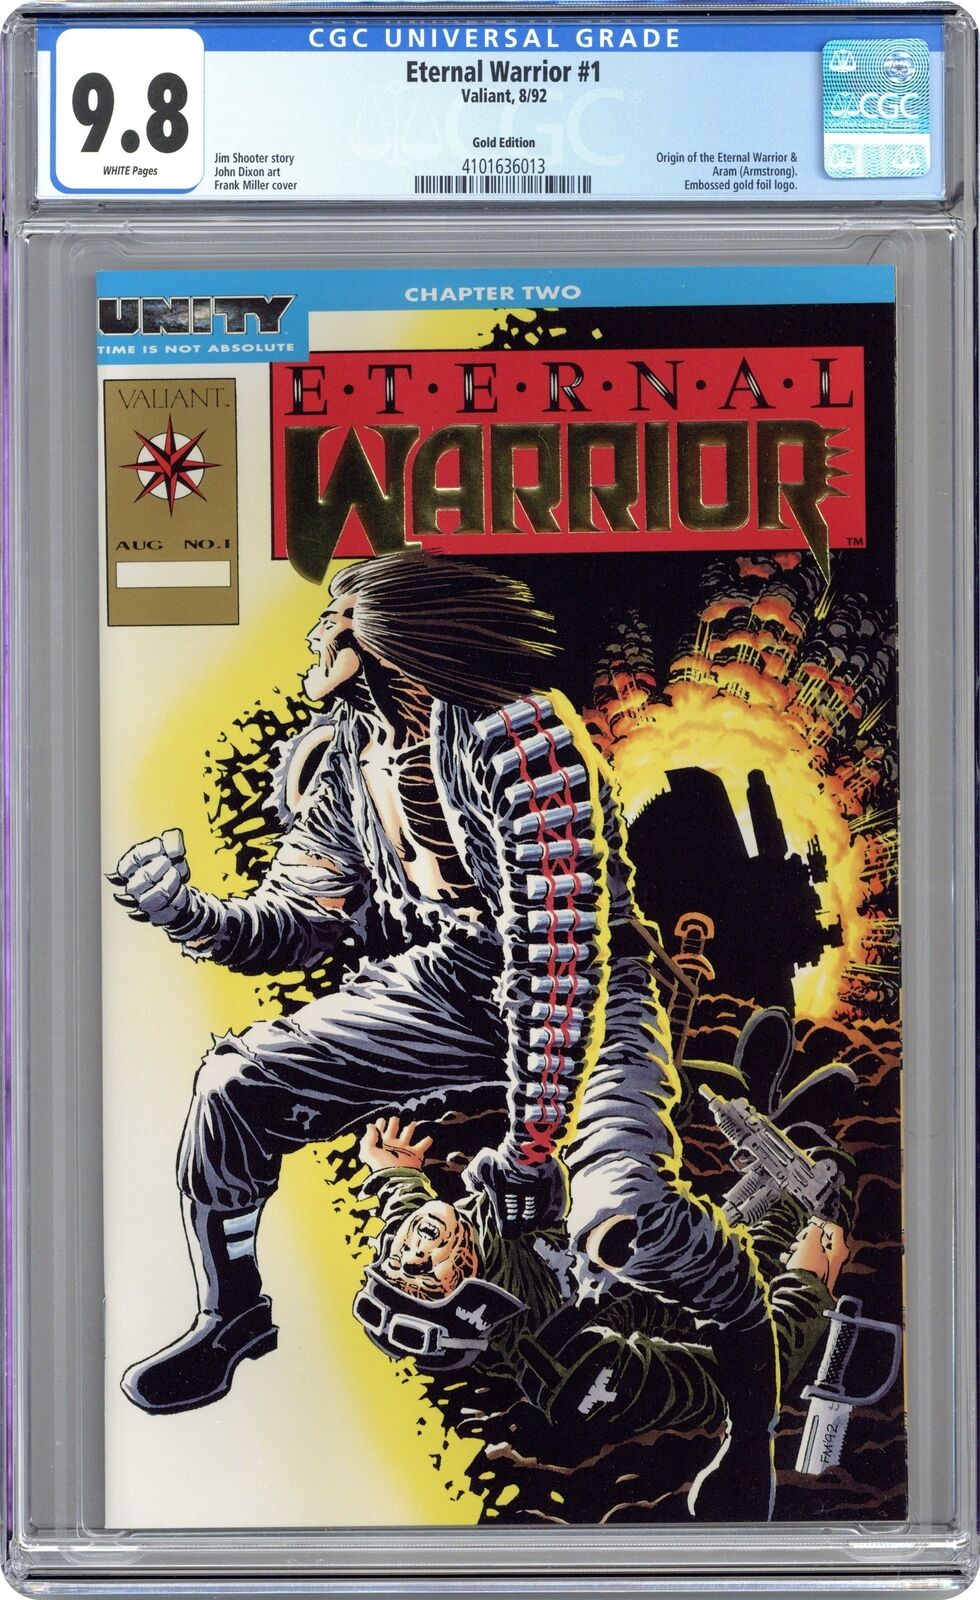 Eternal Warrior #1 Gold Embossed Variant CGC 9.8 1992 4101636013